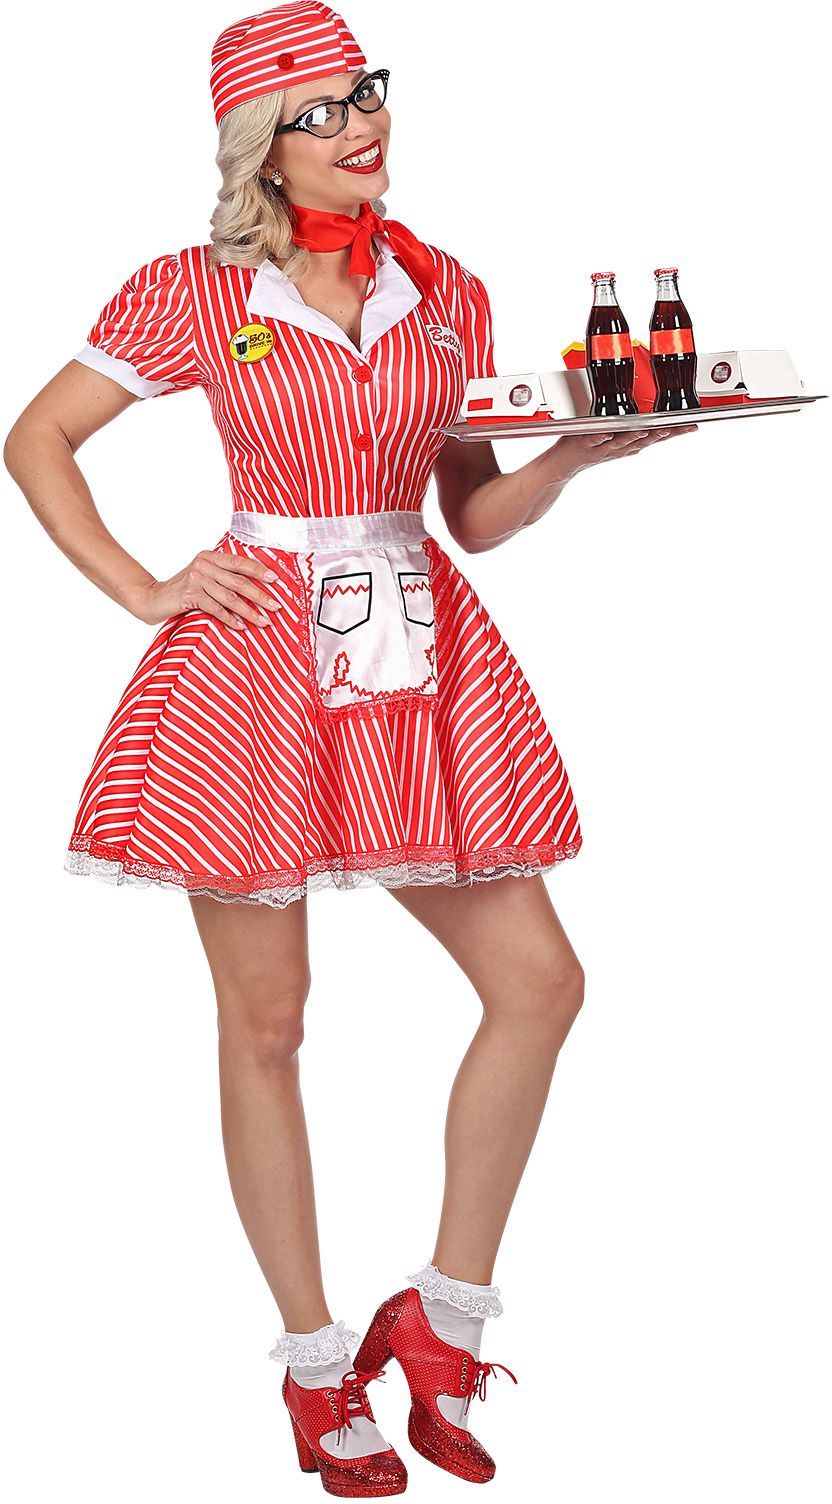 Peer Lauw modder Rood serveerster outfit vrouwen | Feestkleding.nl